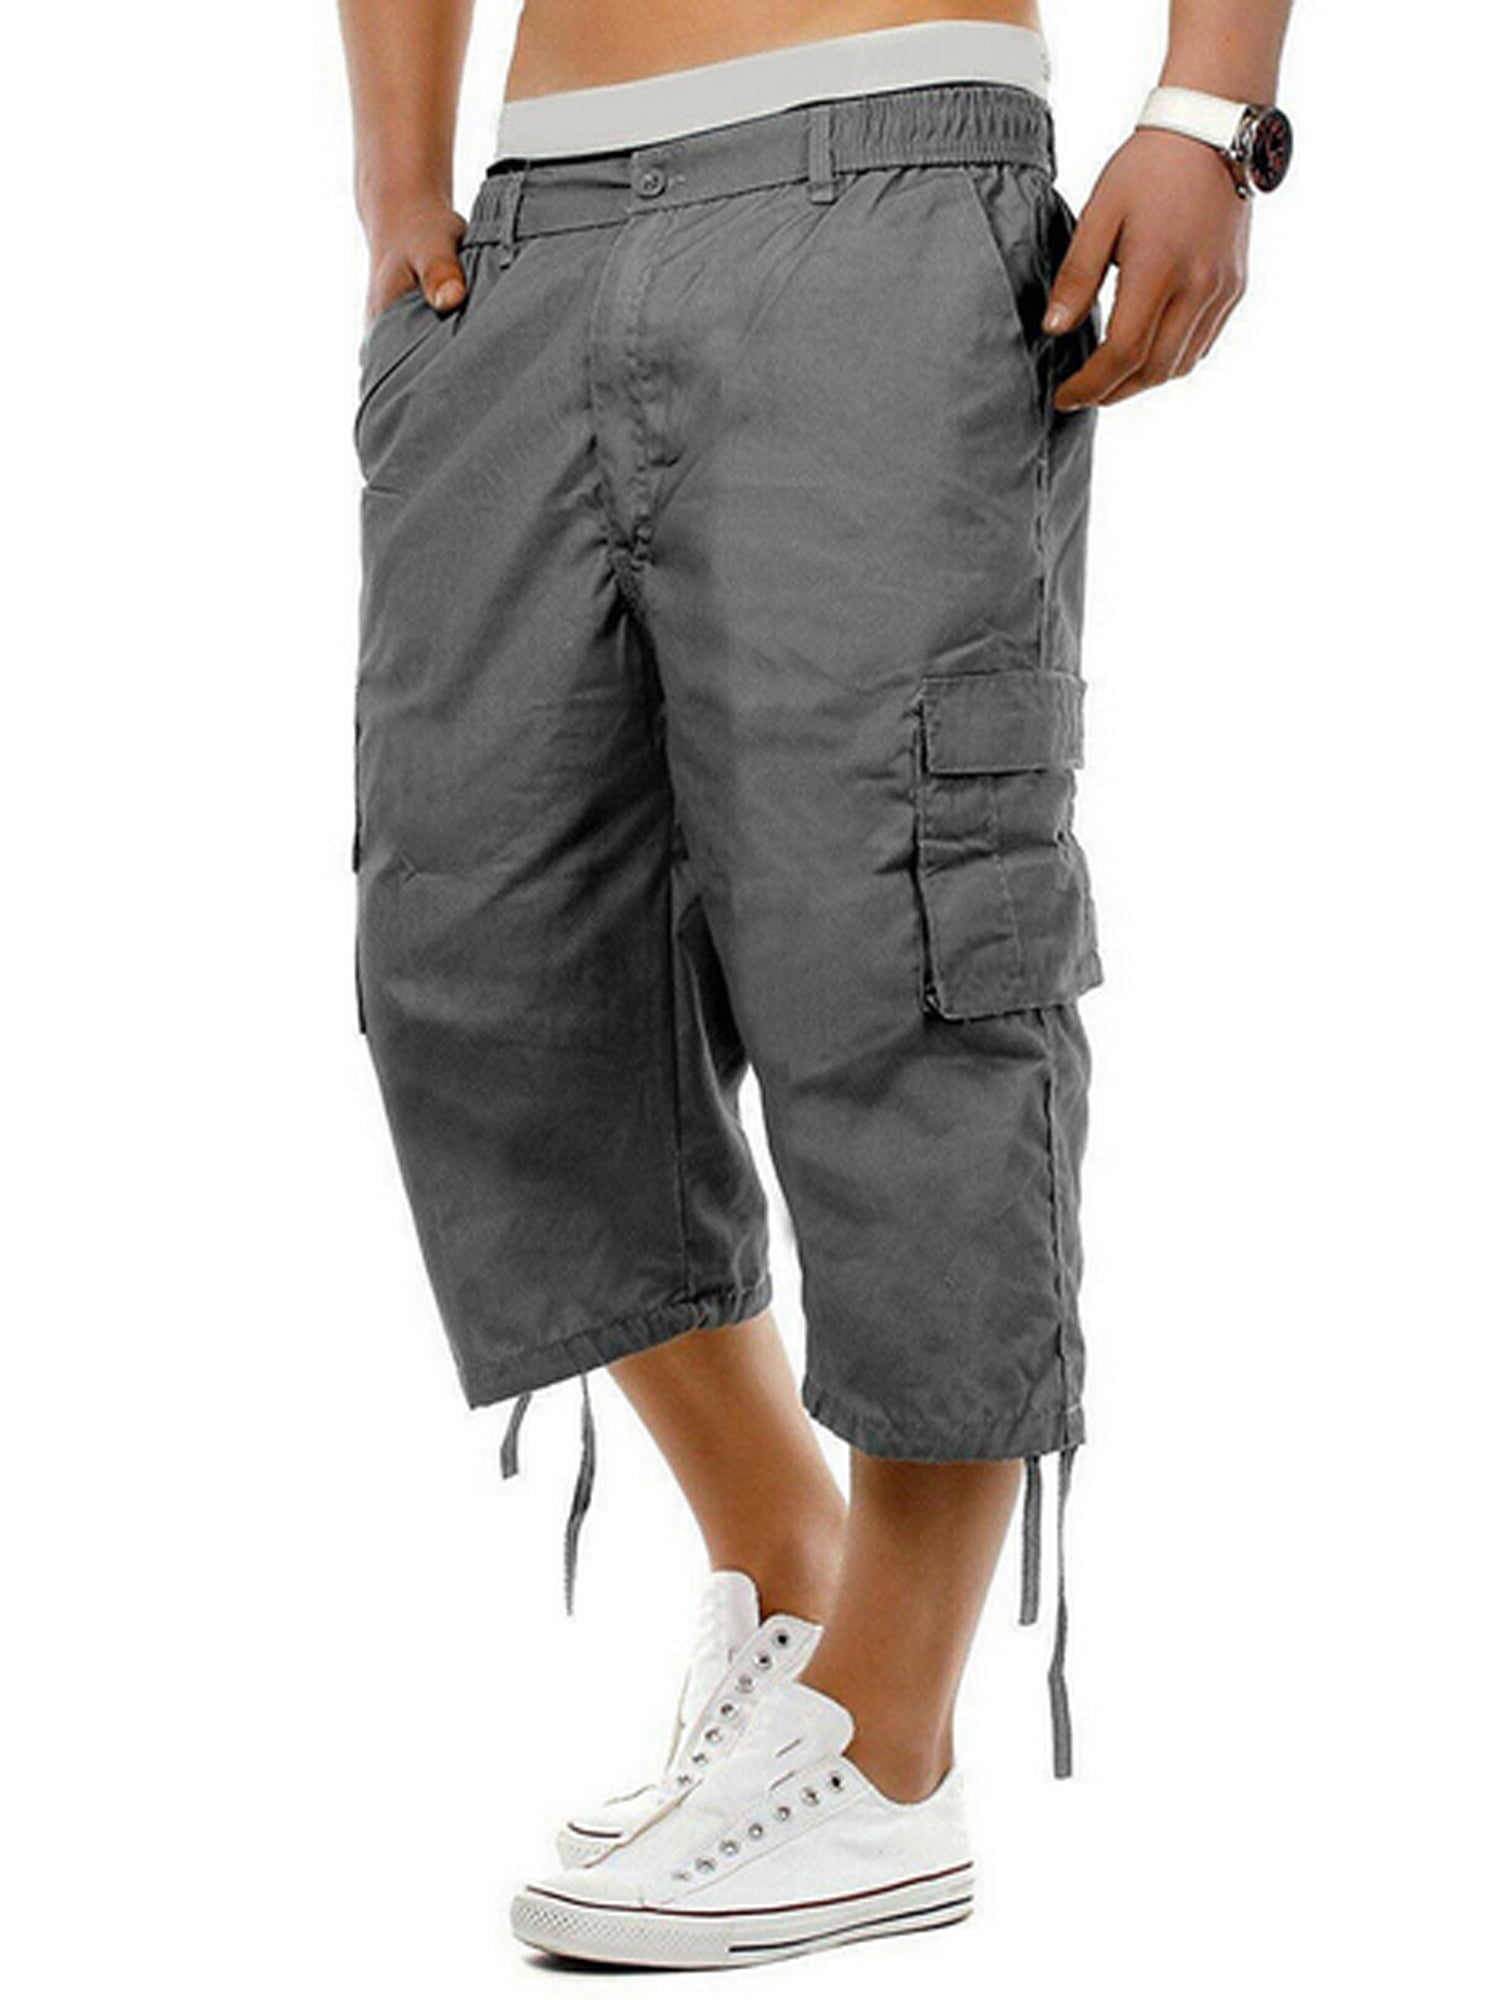 Avamo Men's Capri Shorts Elastic Waisted Bottoms Drawstring 3/4 Long Pants  Casual Basketball Sports Beachwear Tibetan XL 